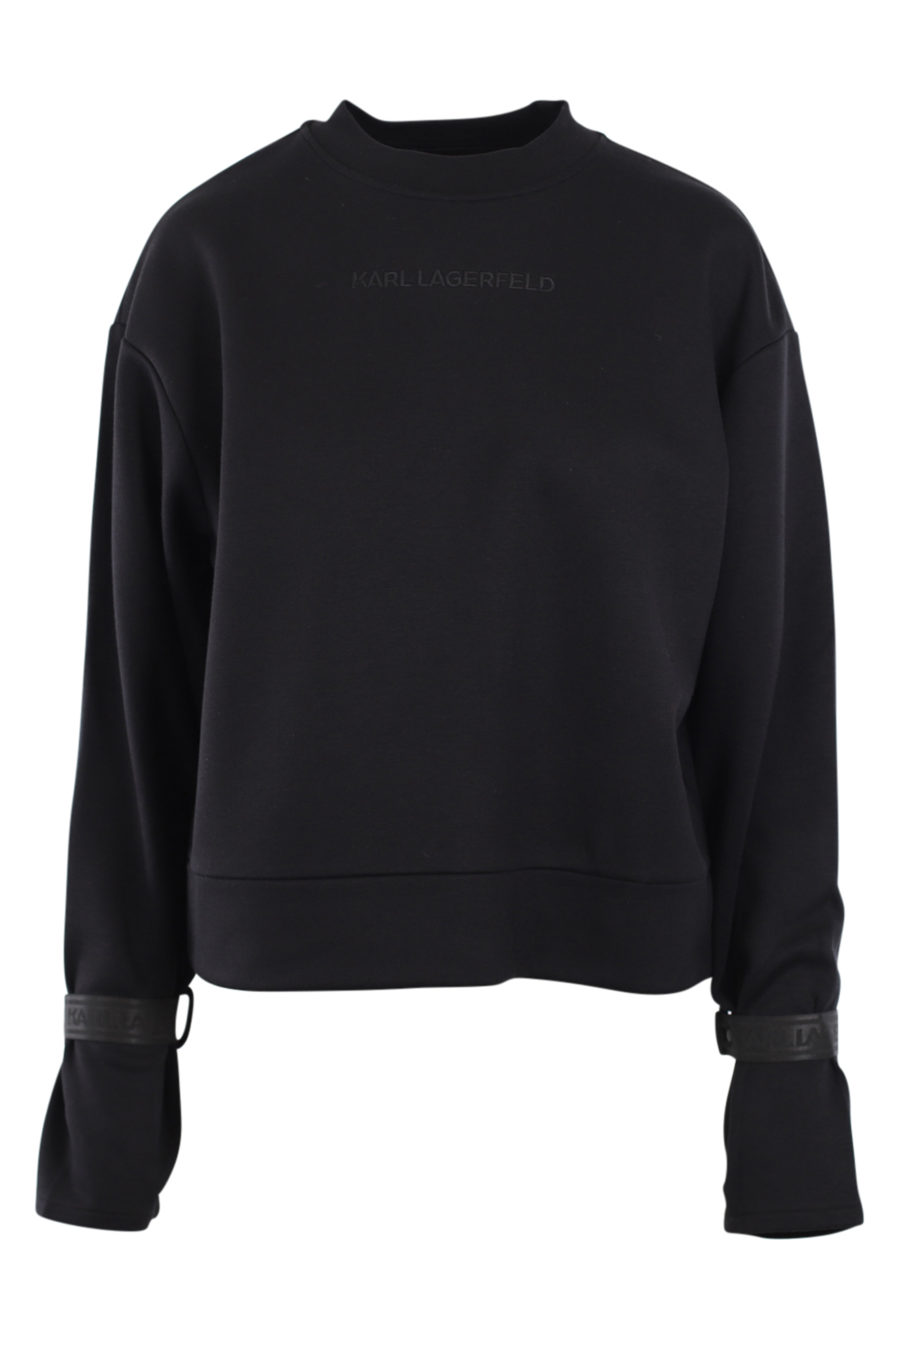 Black sweatshirt with black logo - IMG 0892